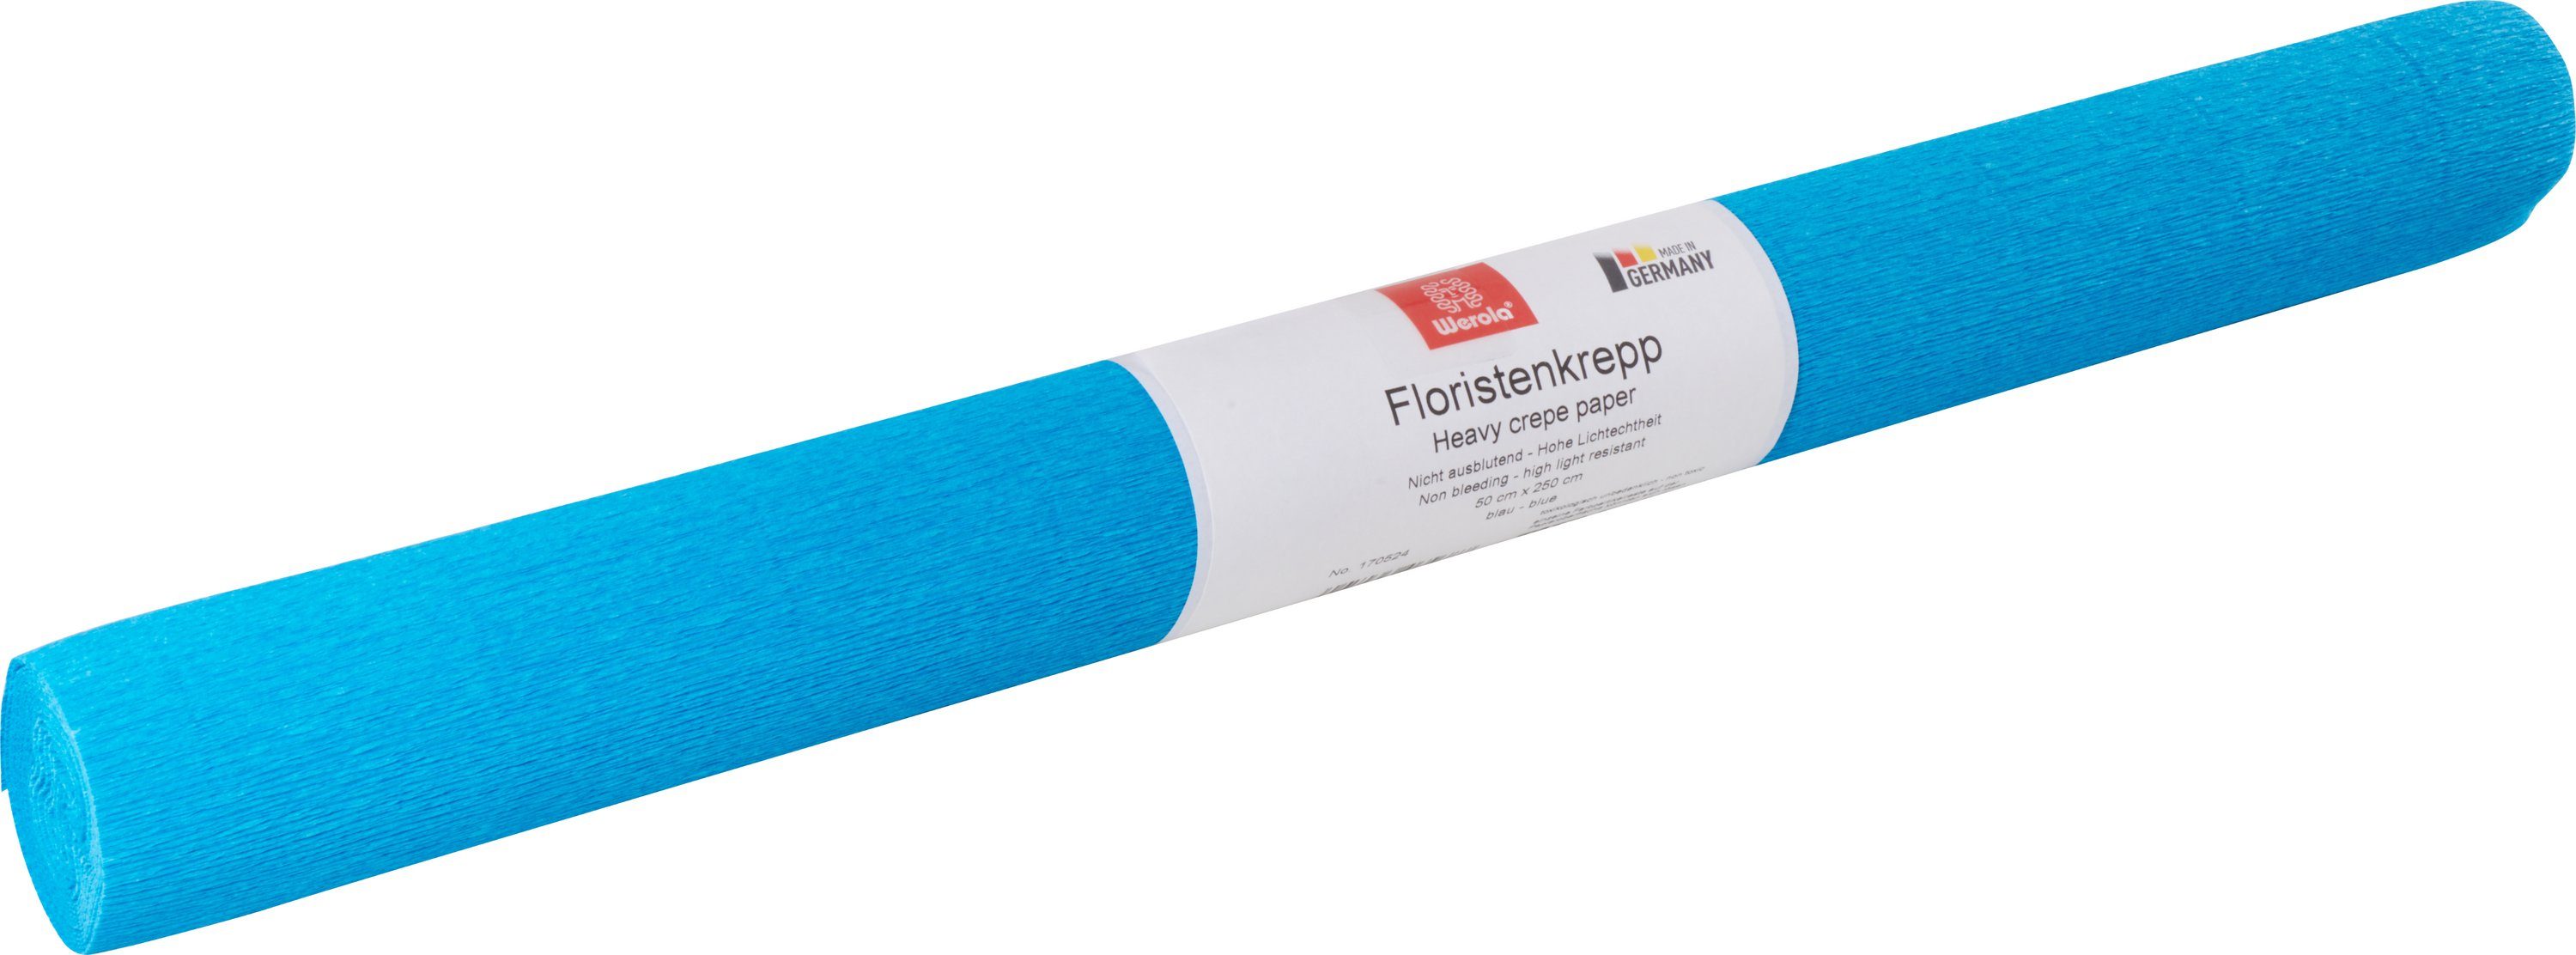 Werola Feinpapier Floristen-Kreppapier, 250 cm x 50 cm, farbfest Blau